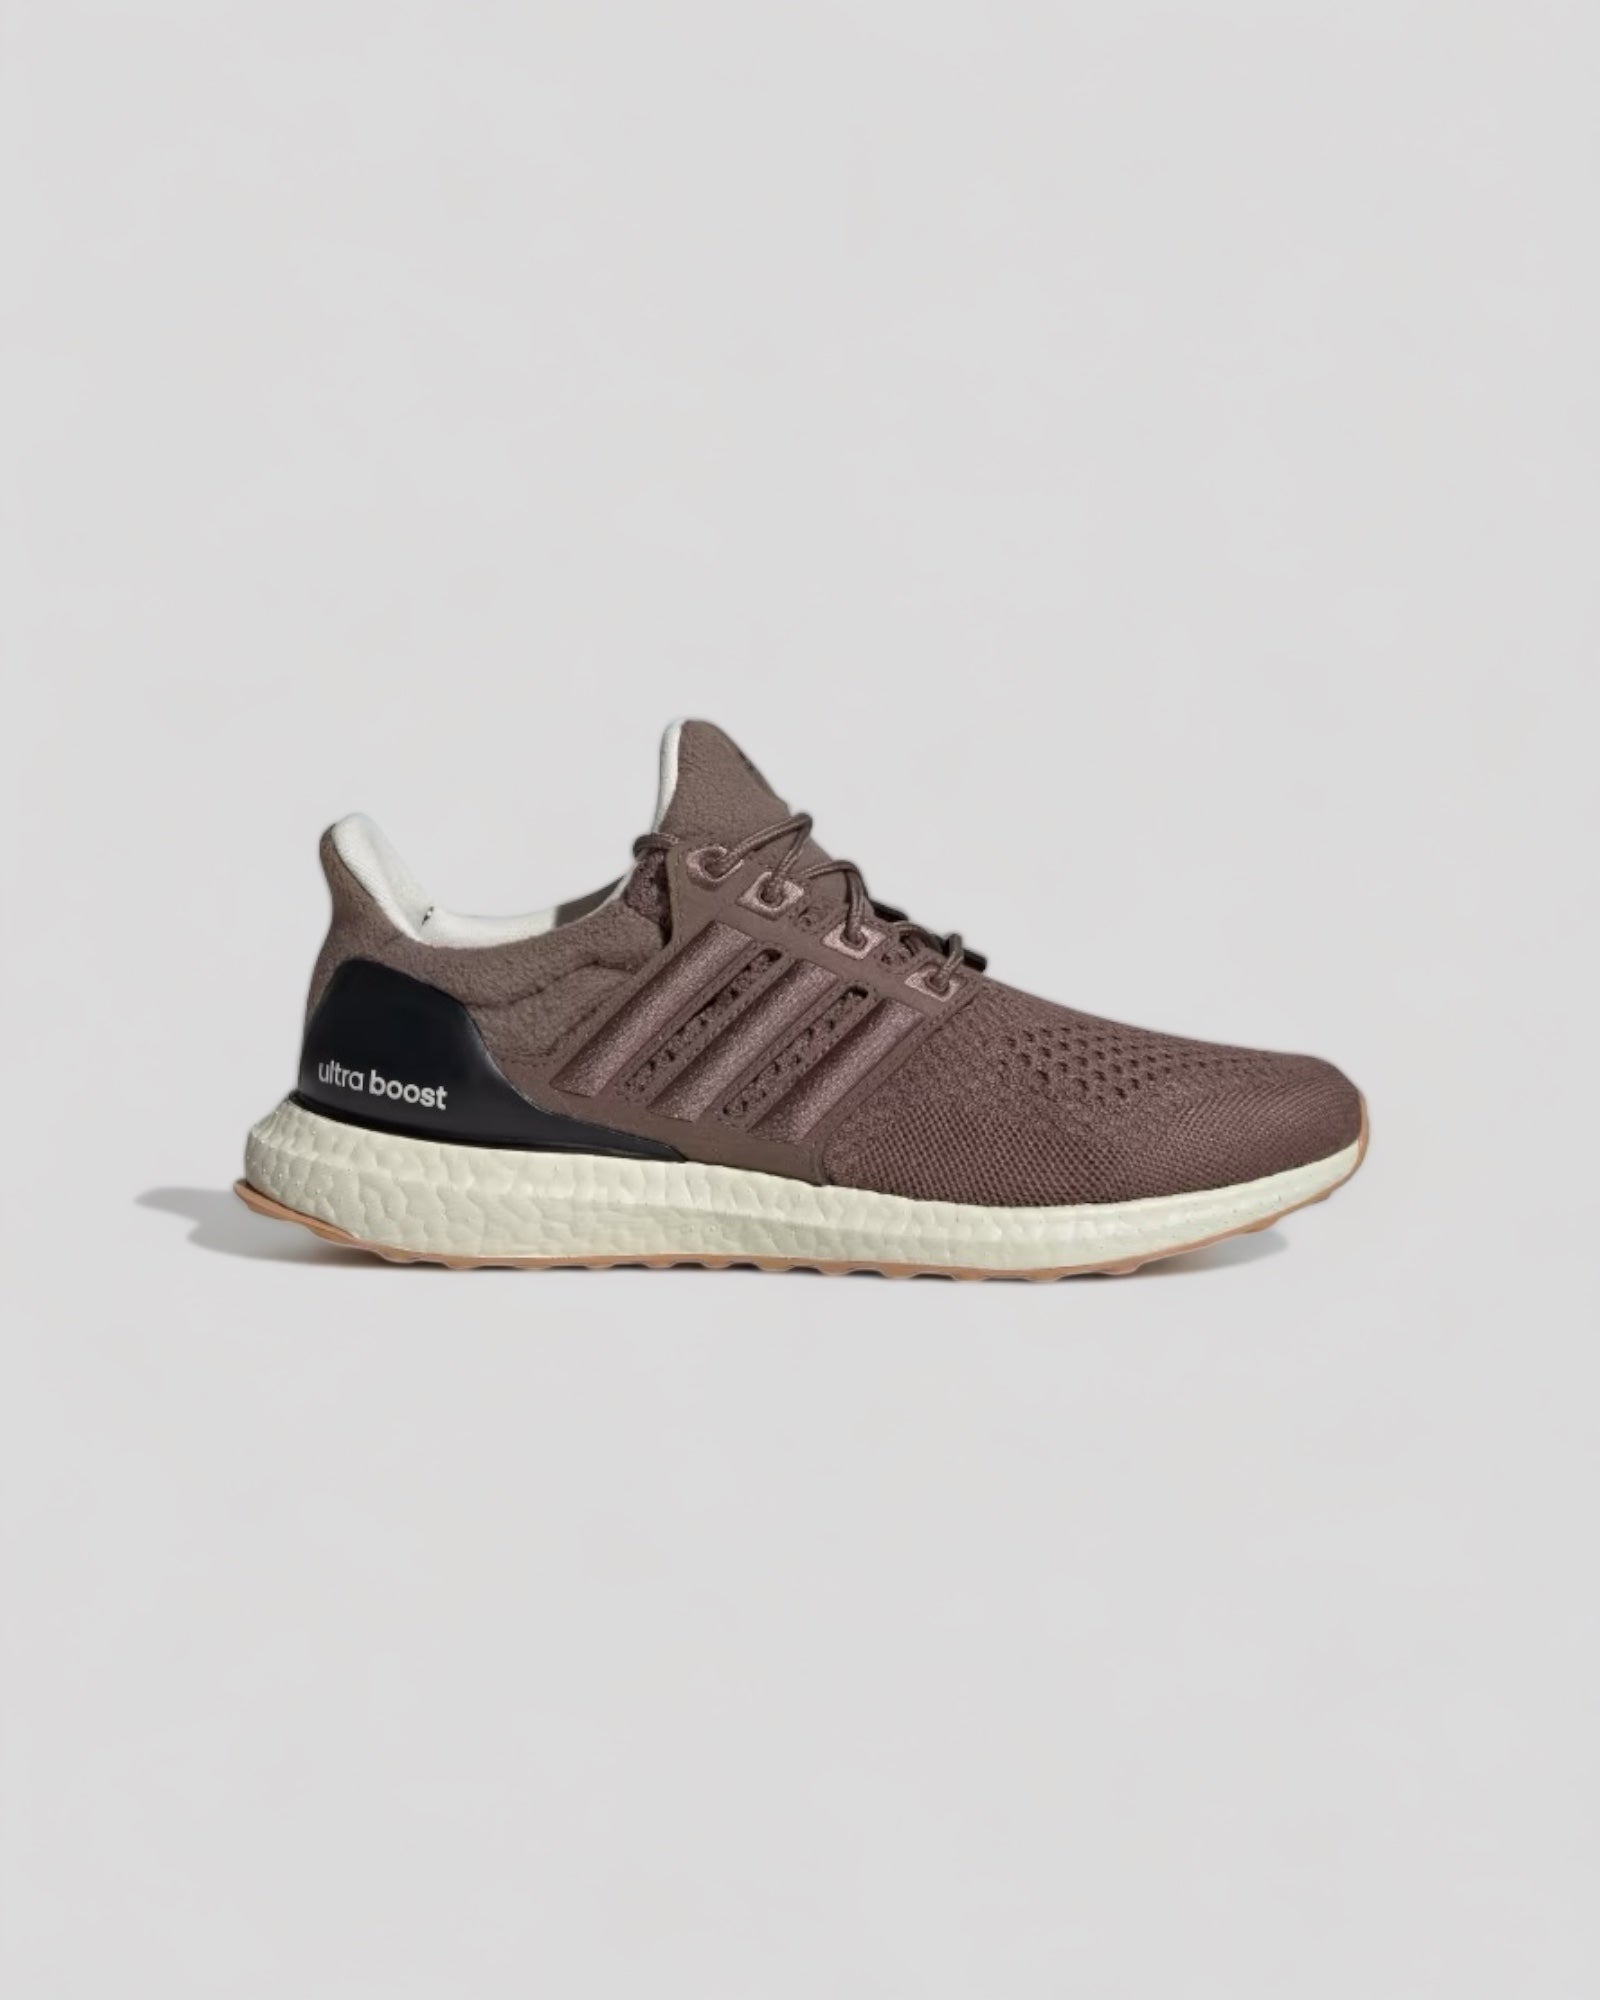 Adidas || Ultraboost 1.0 - Brown / Black